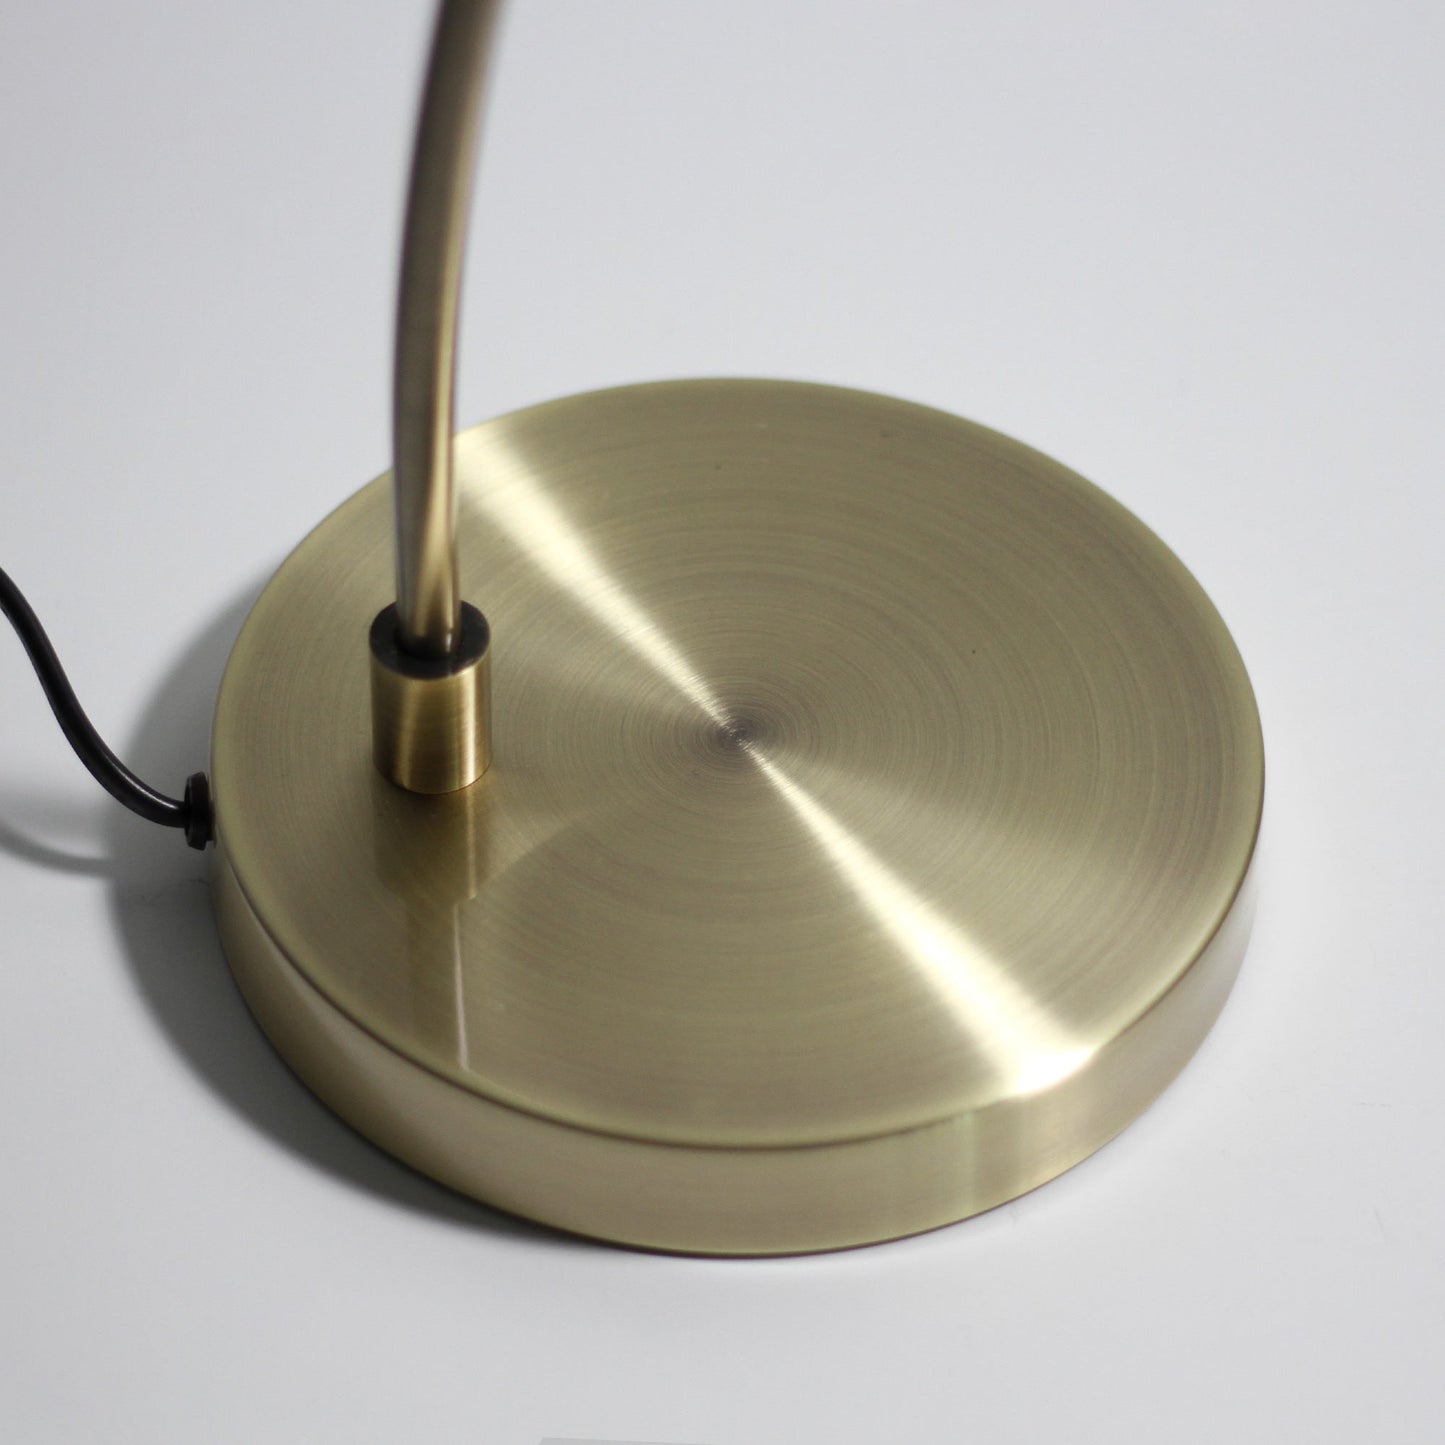 Sarla Table Lamp - Antique Brass